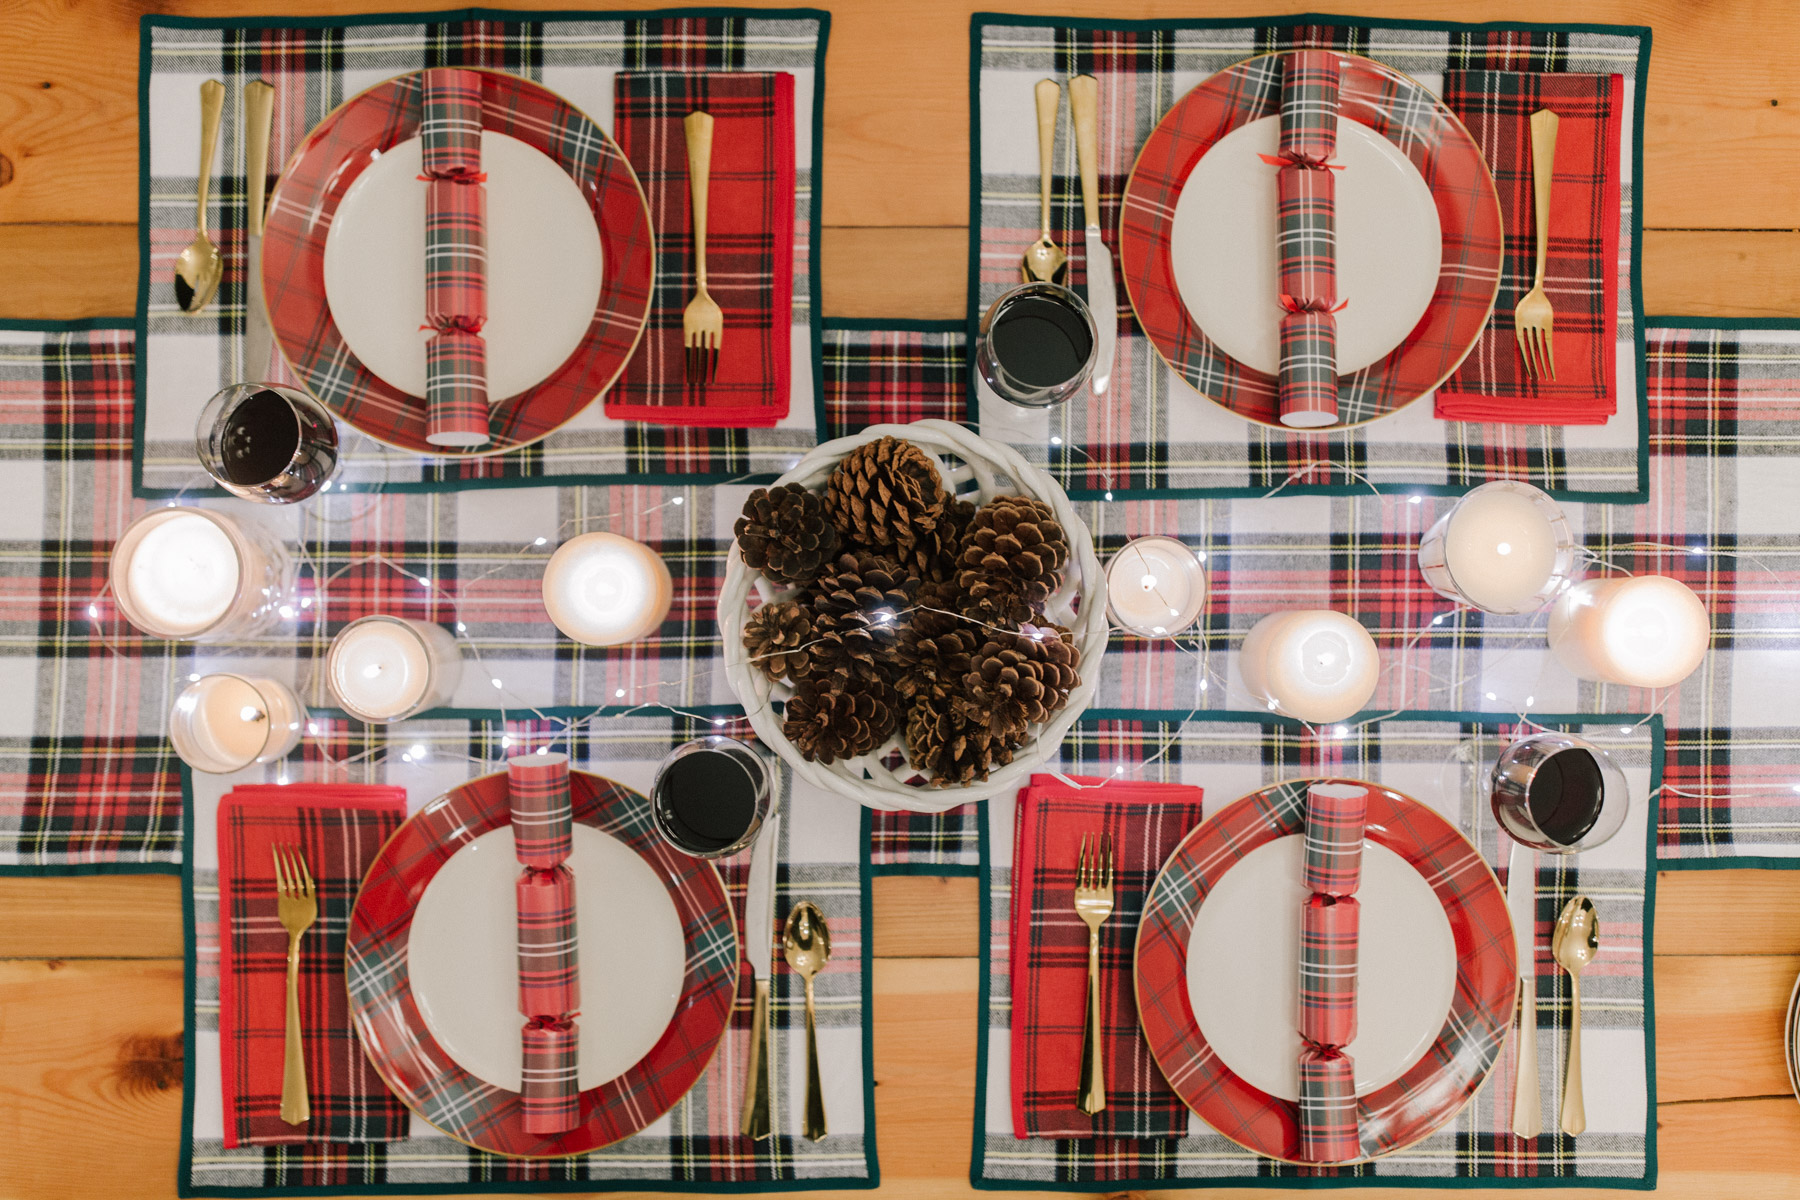 Plaid table settings for Christmas